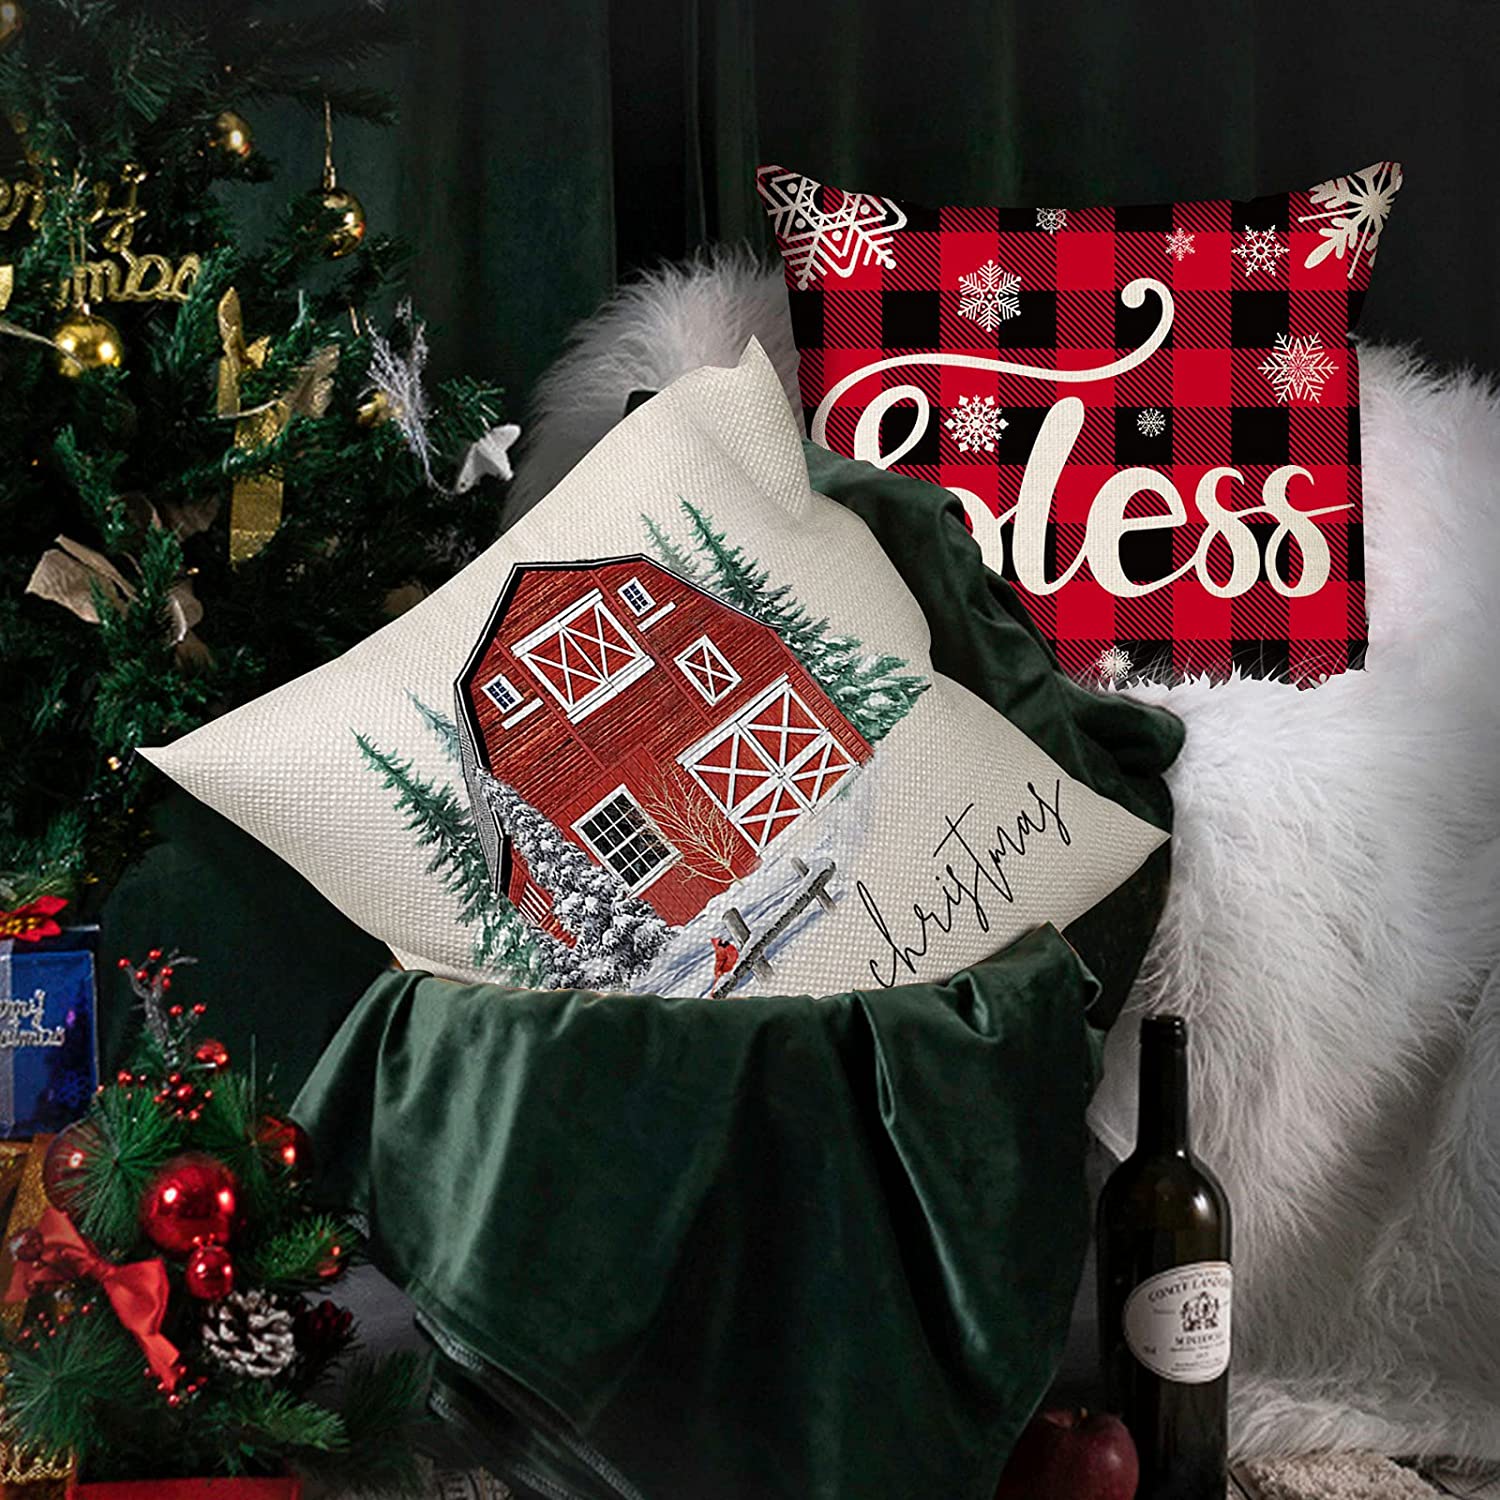 Set of 4 Buffalo Plaid Christmas Pillow Covers 18 x 18 with 4 Bonus Coasters (Farmhouse, Truck)